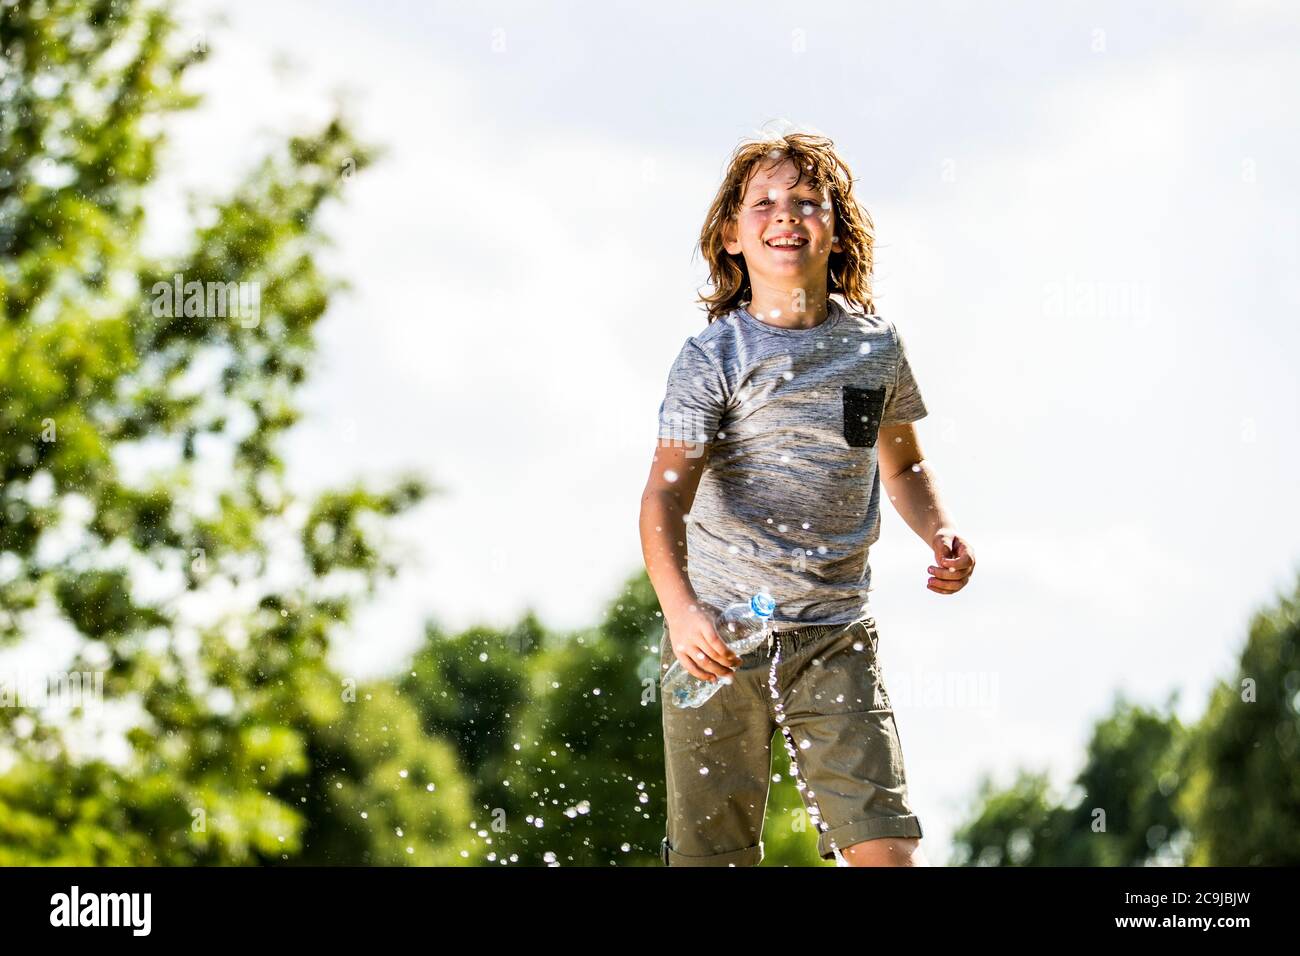 Boy splashing water from plastic bottle, smiling, portrait. Stock Photo